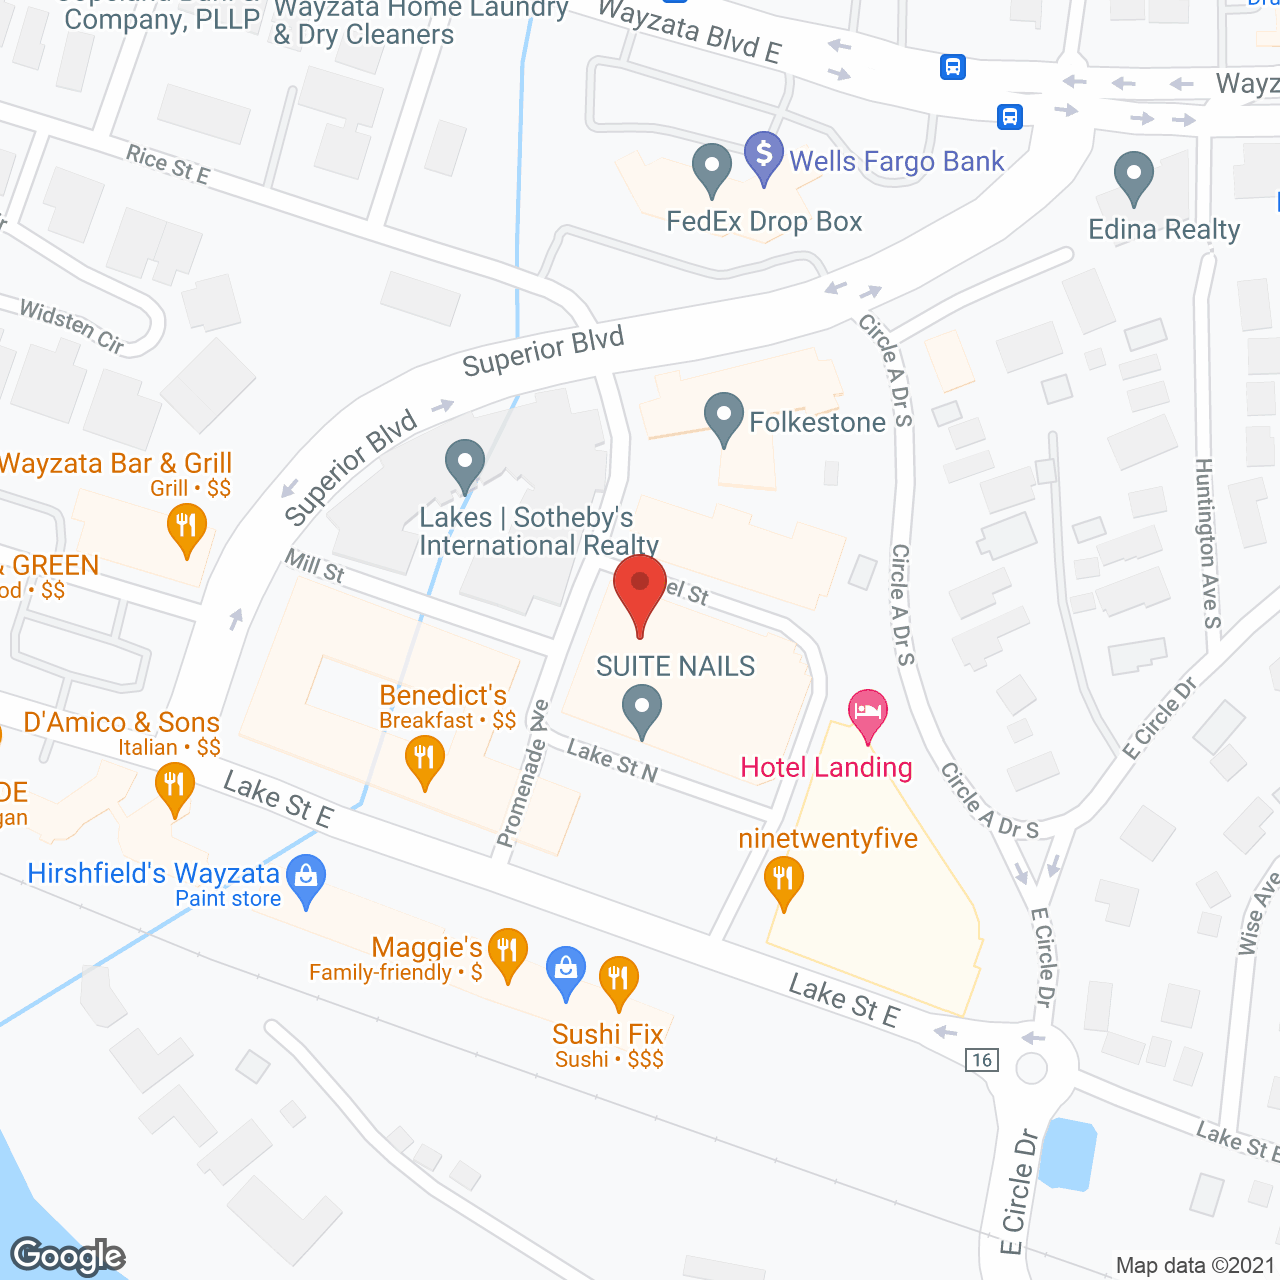 Folkestone in google map